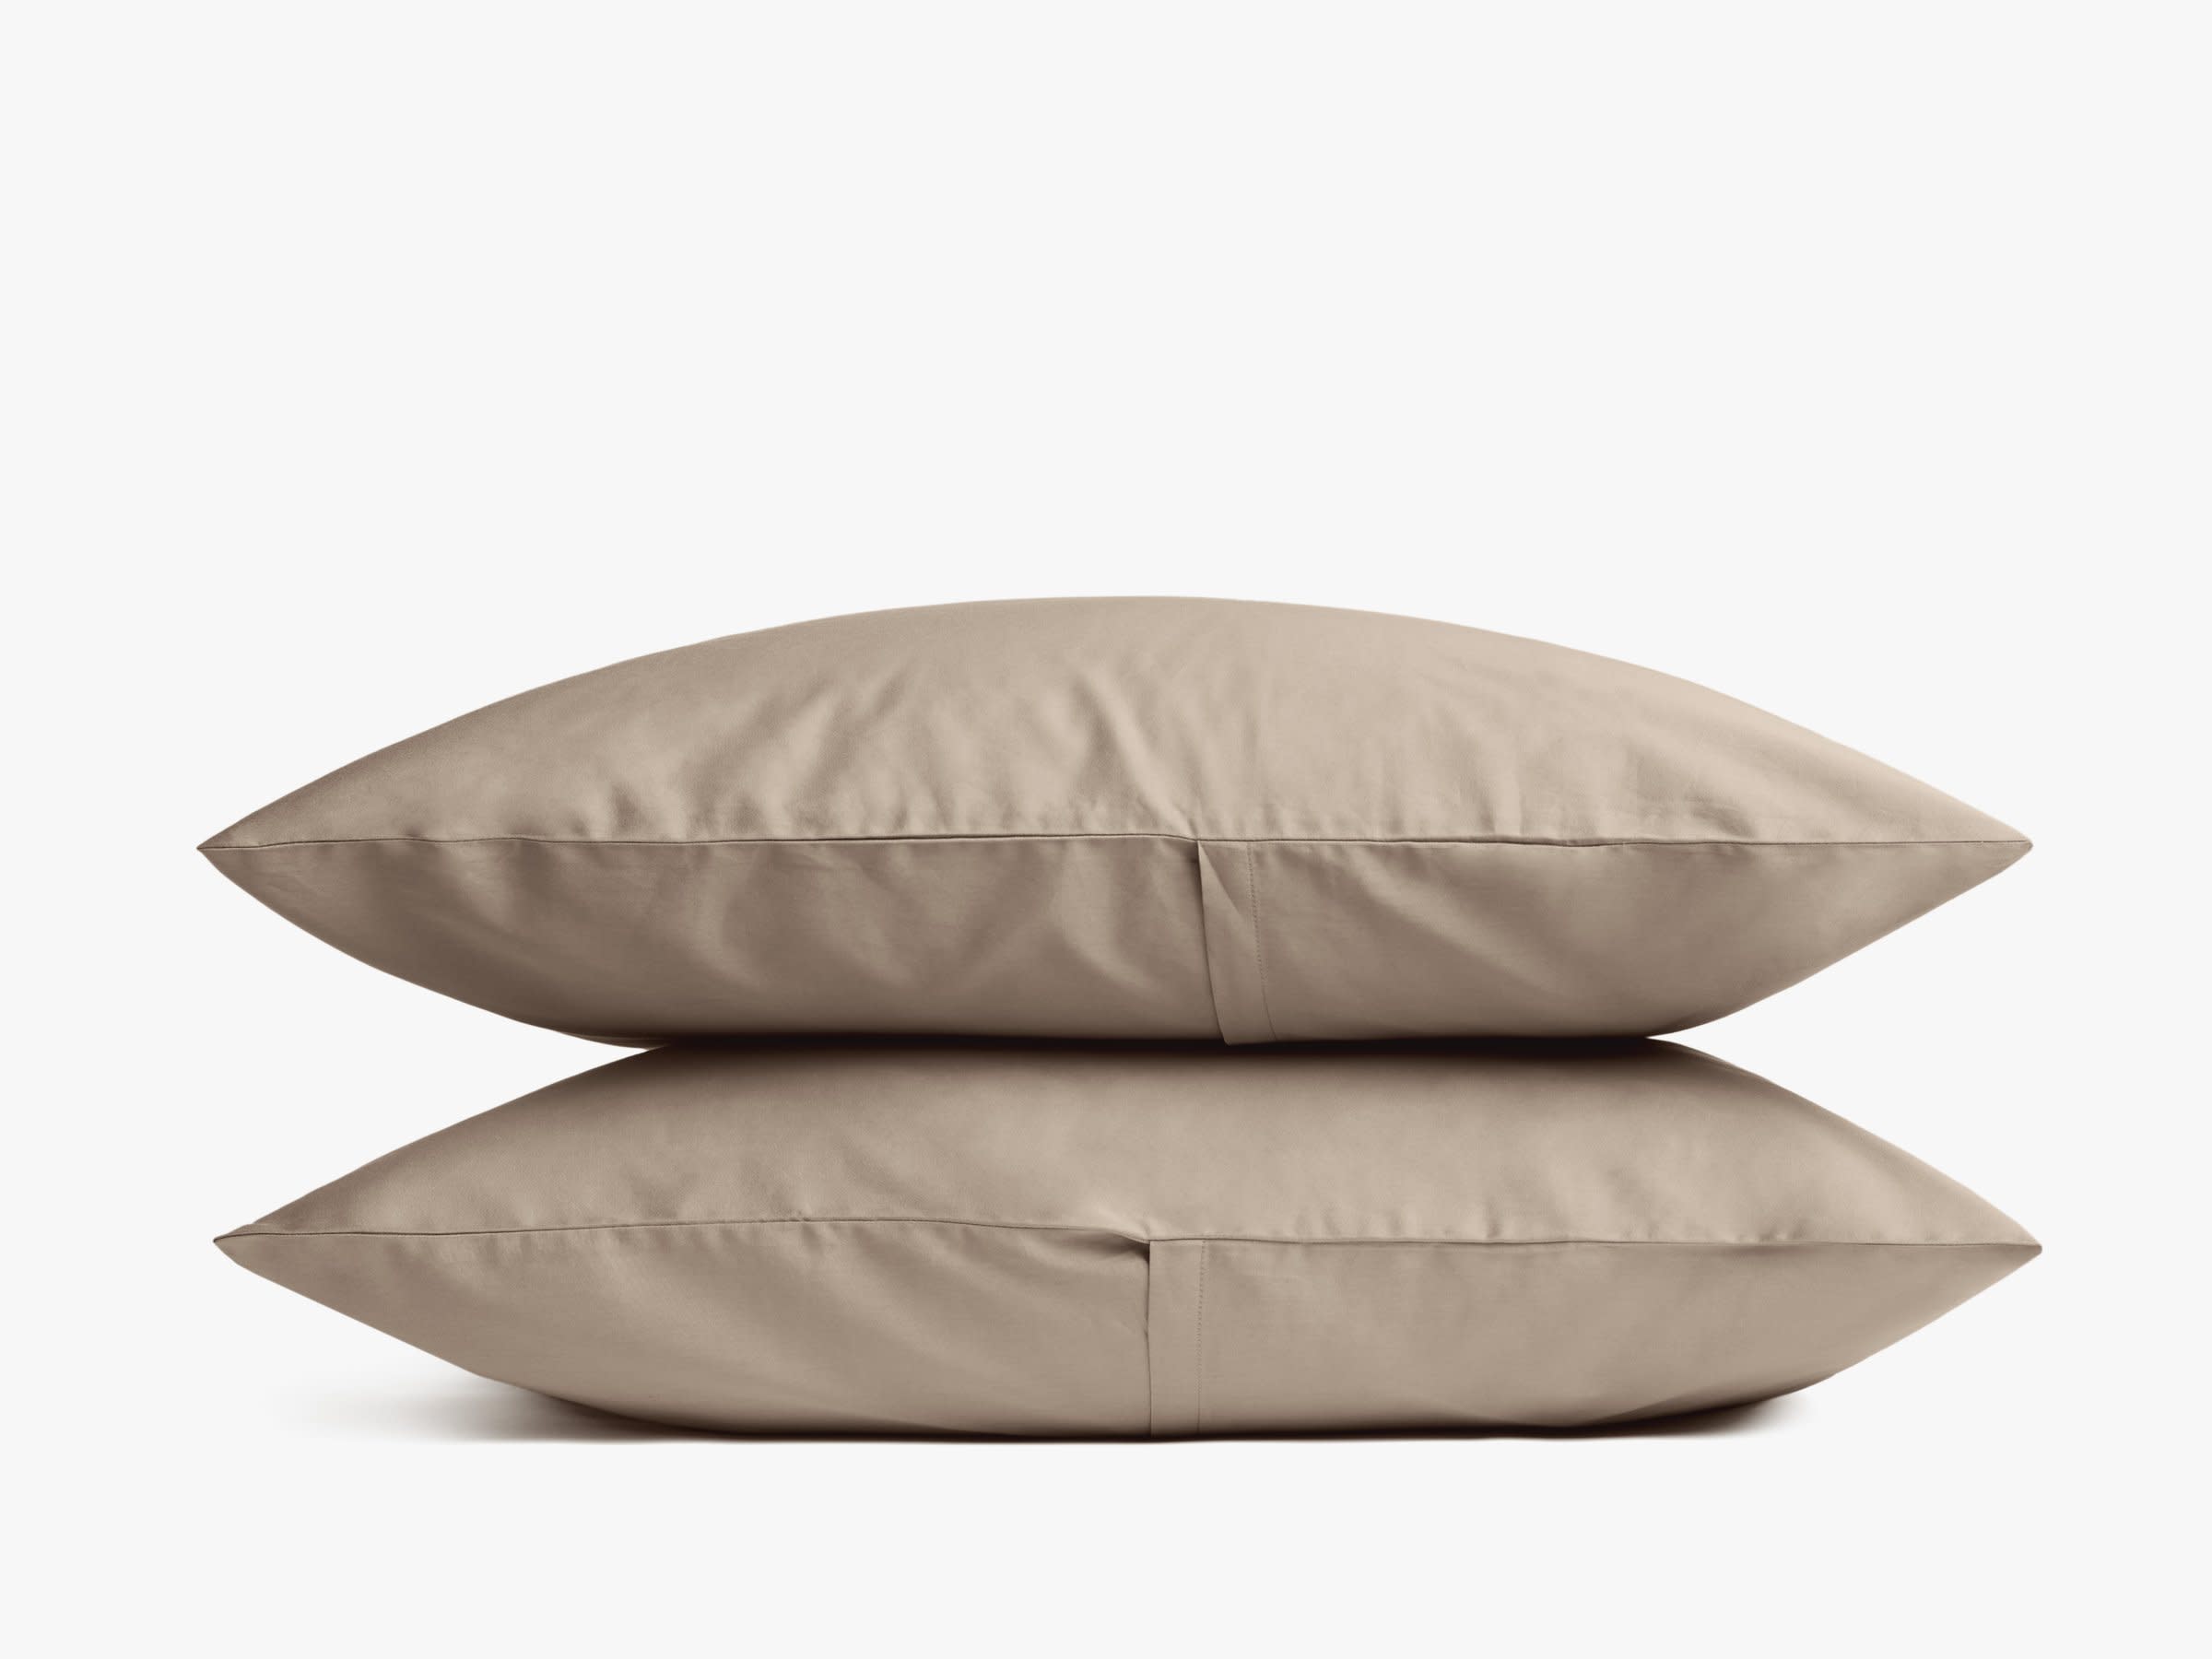 Sateen Pillowcase Set Product Image